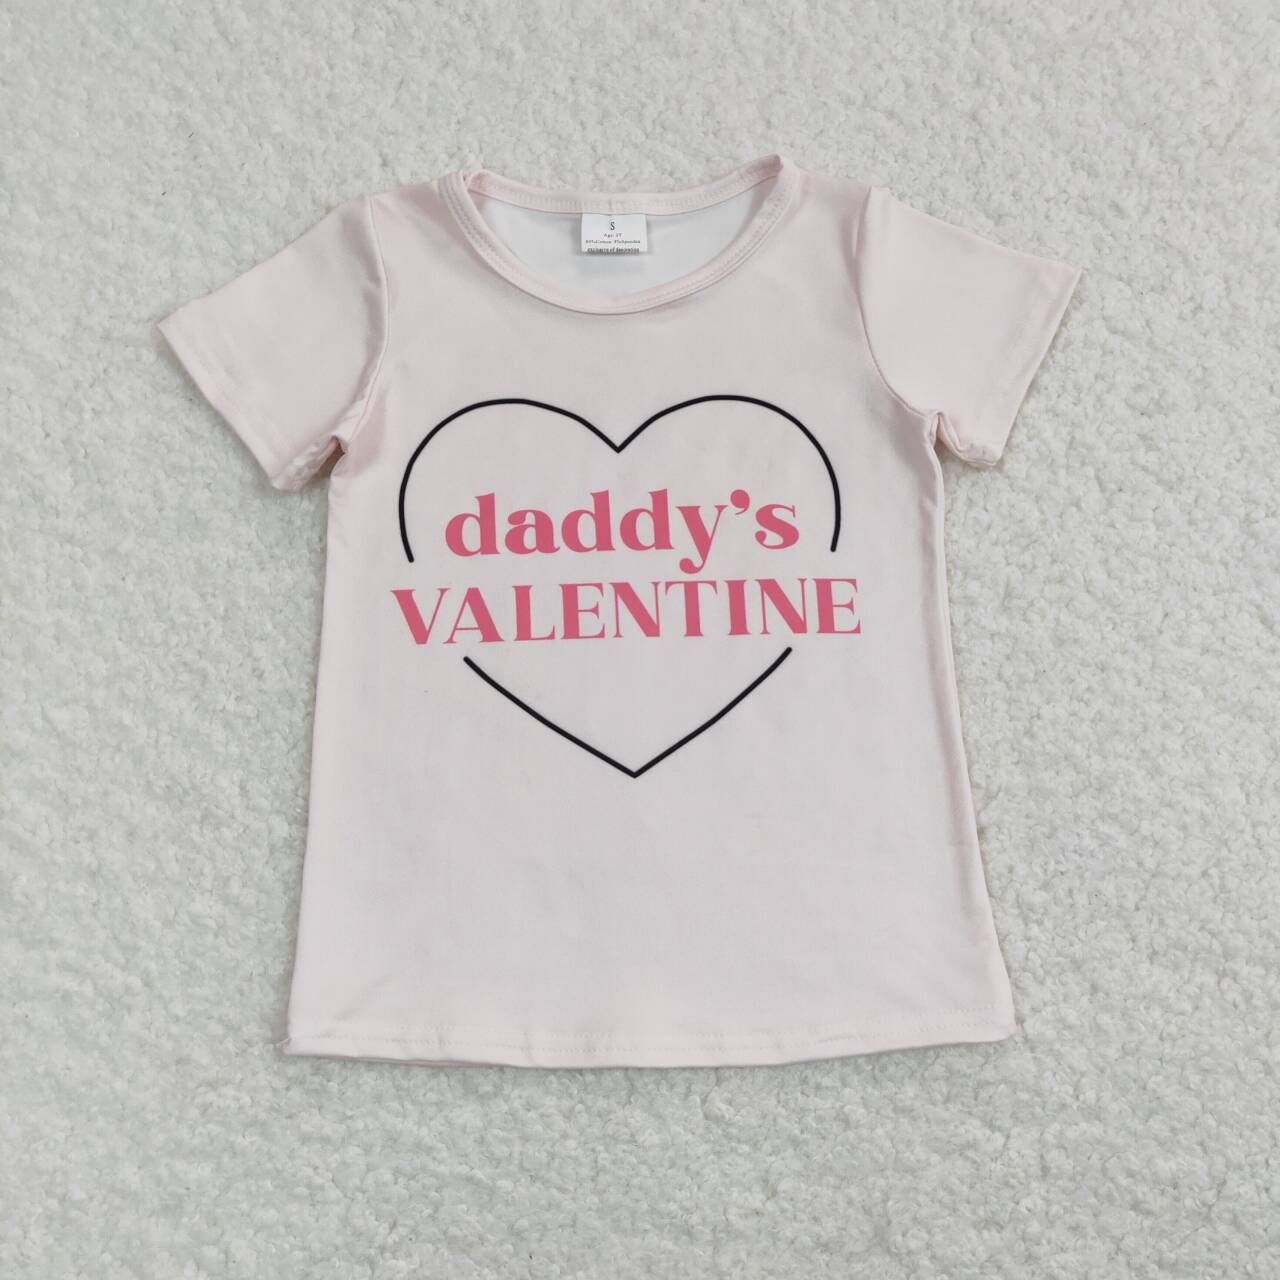 daddys valentines short sleeve shirt